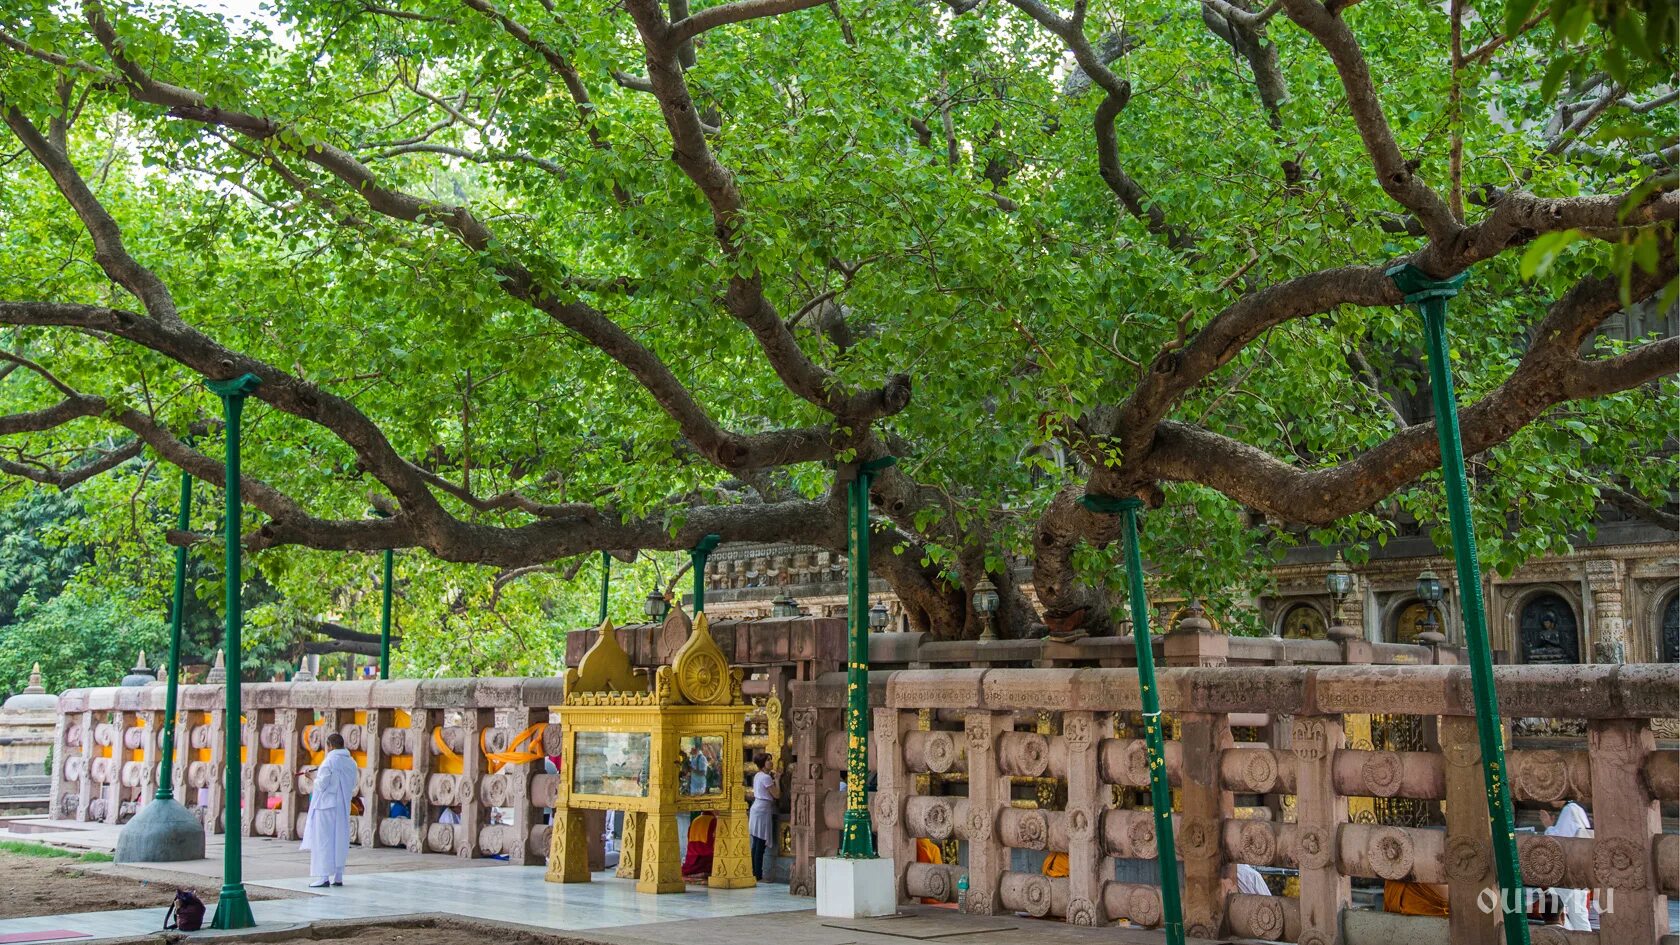 Деревья на шри ланке. Дерево Бодхи Шри Ланка. Анурадхапура Шри Ланка дерево Бодхи. Бодхгая дерево Бодхи. Дерево Бодхи в Бодхгае.